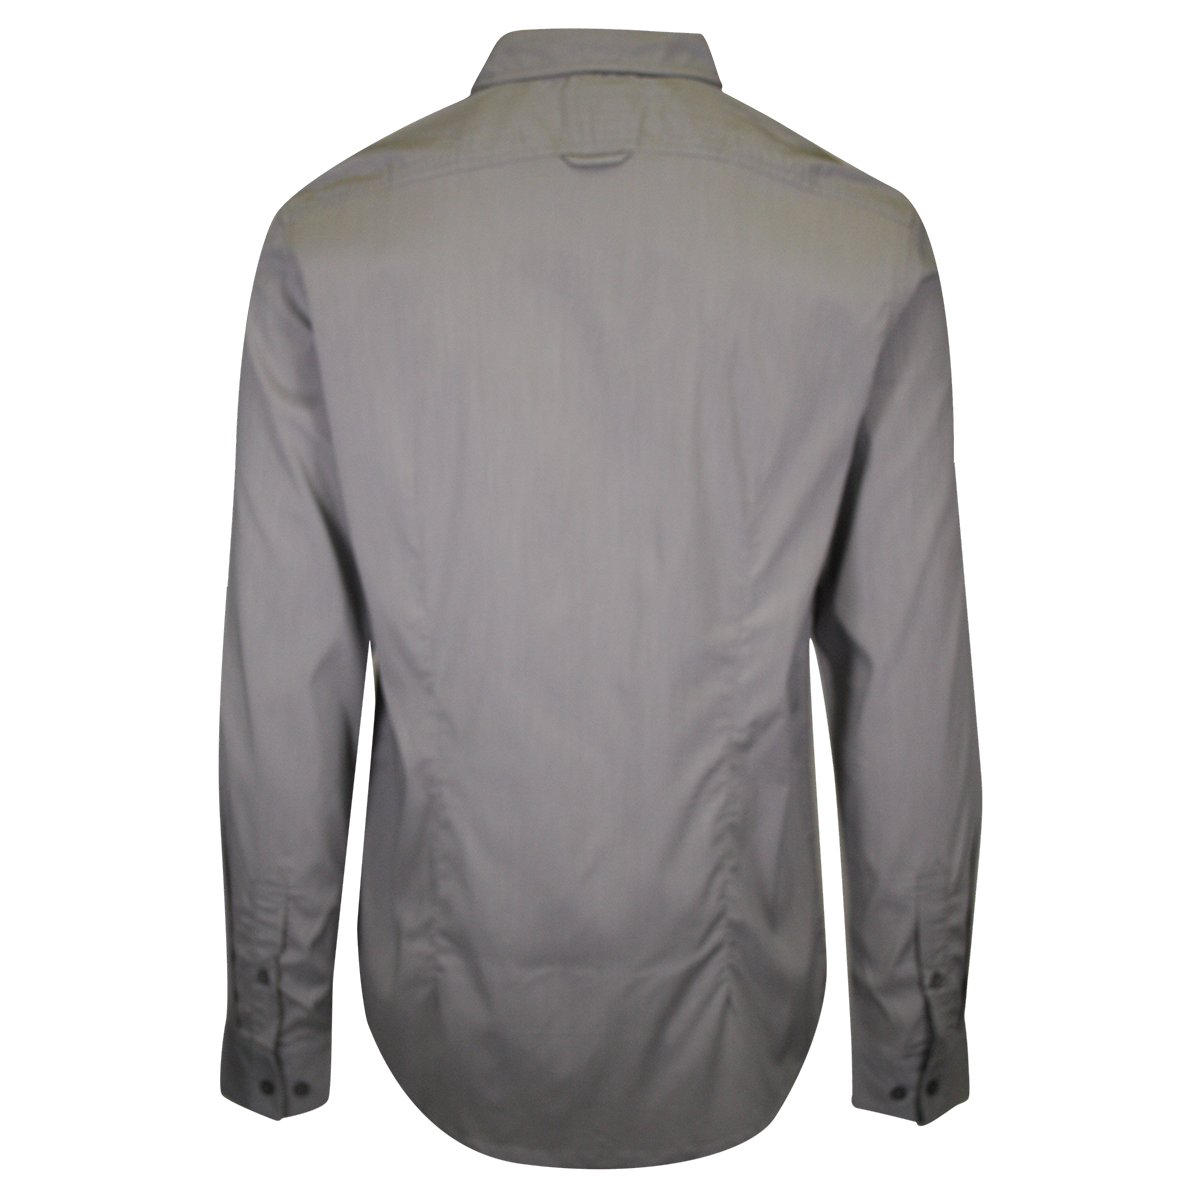 prAna Men's Grey L/S Woven Shirt (S65)